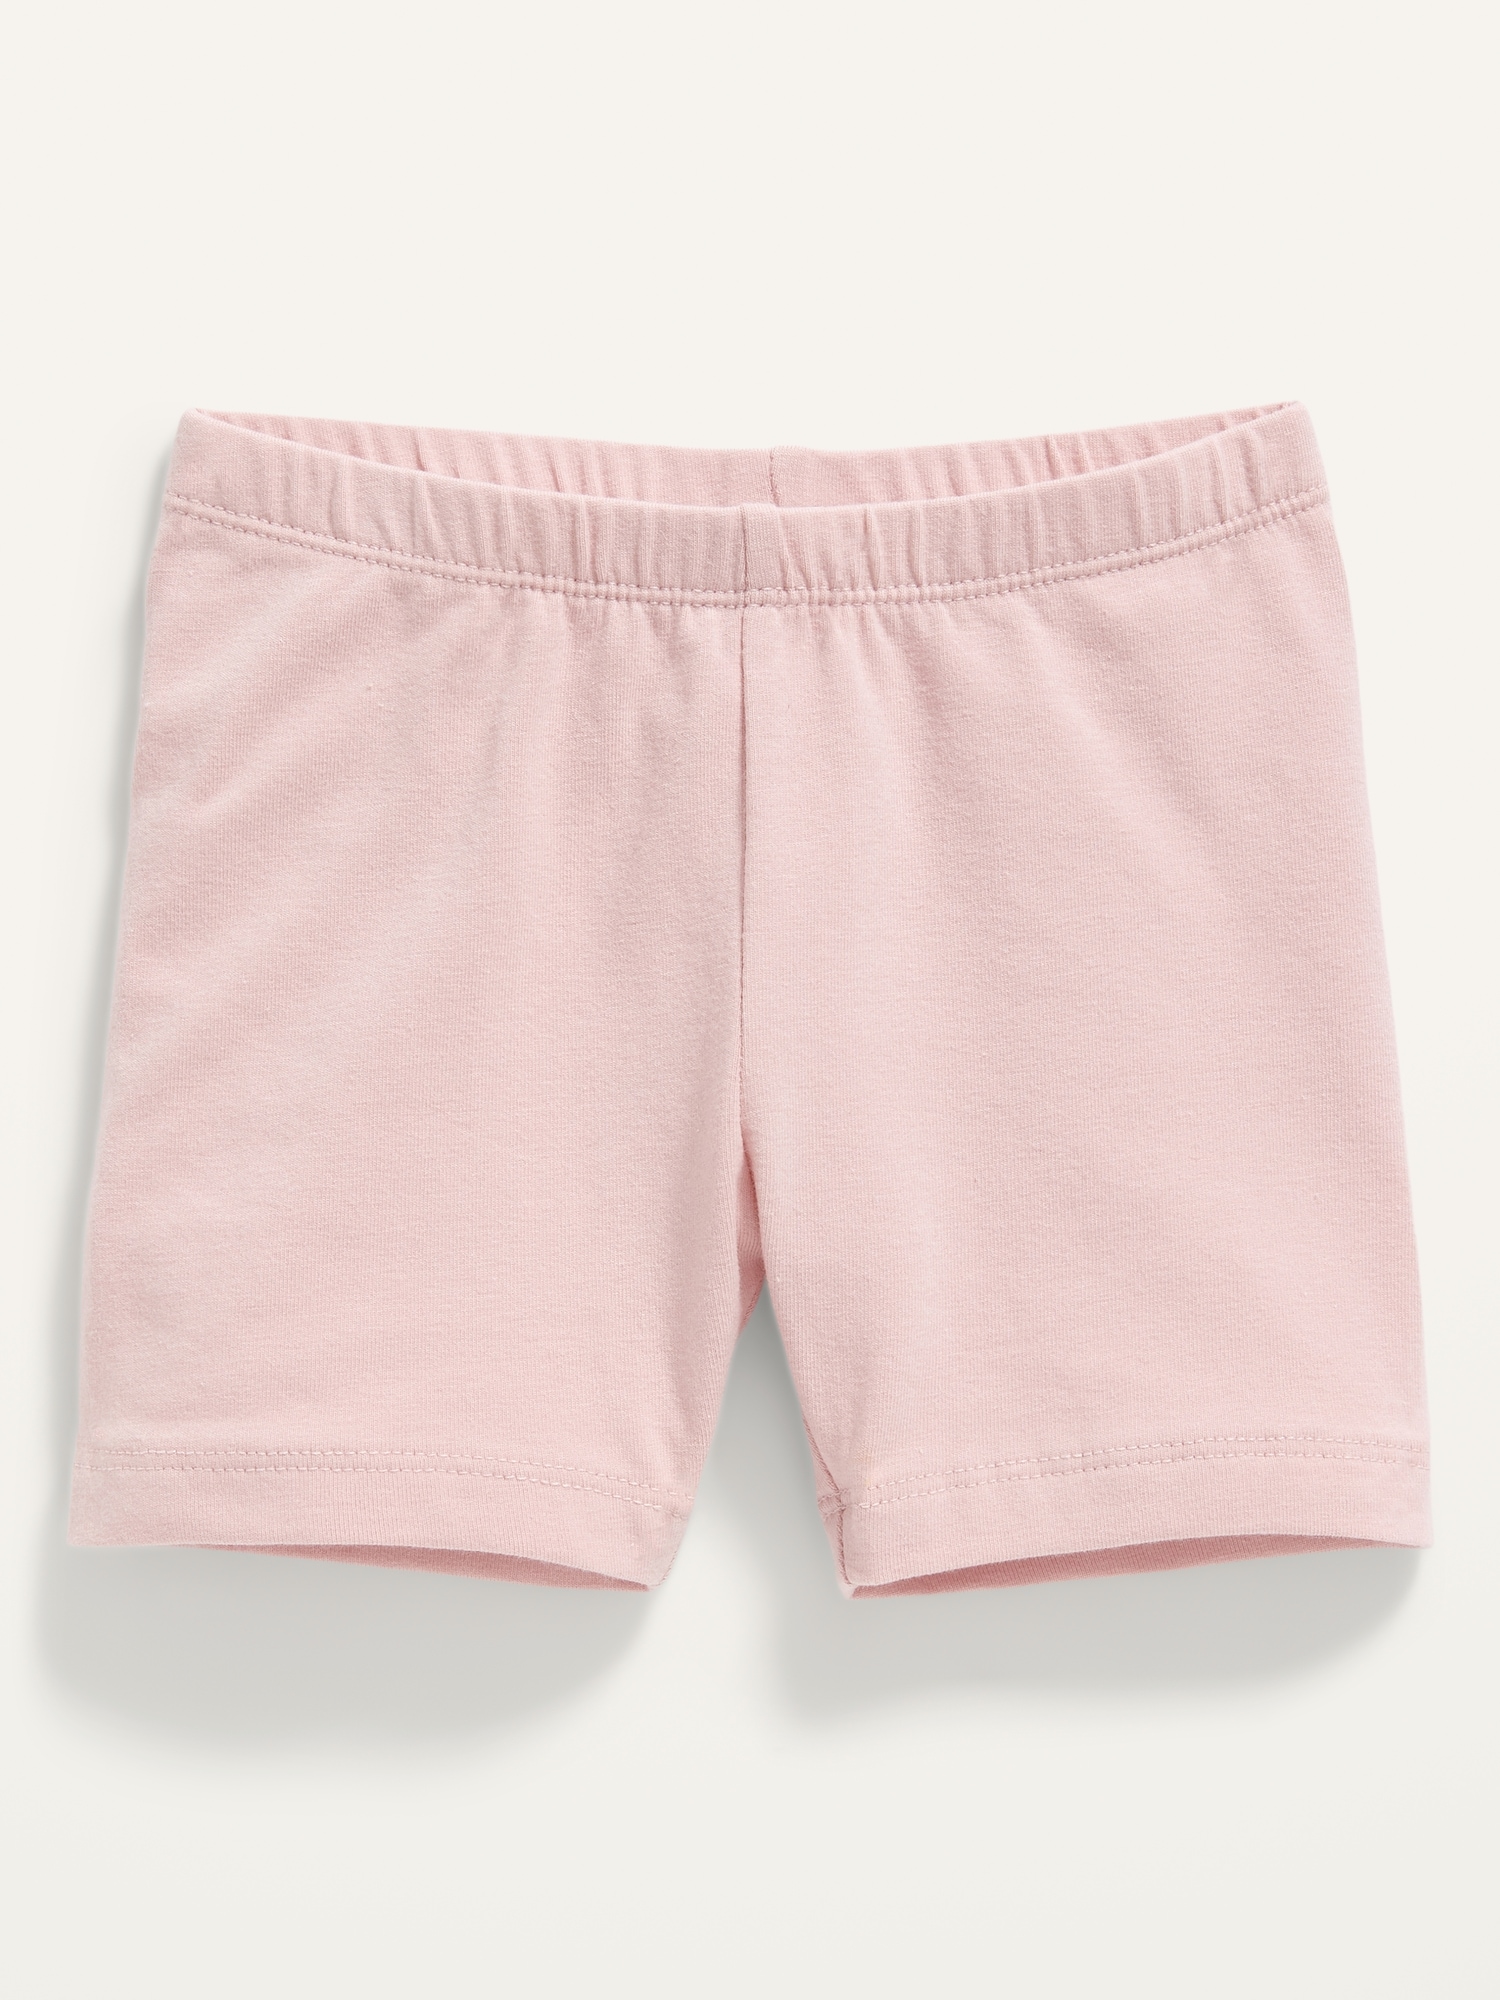 Jersey Biker Shorts for Toddler Girls | Old Navy